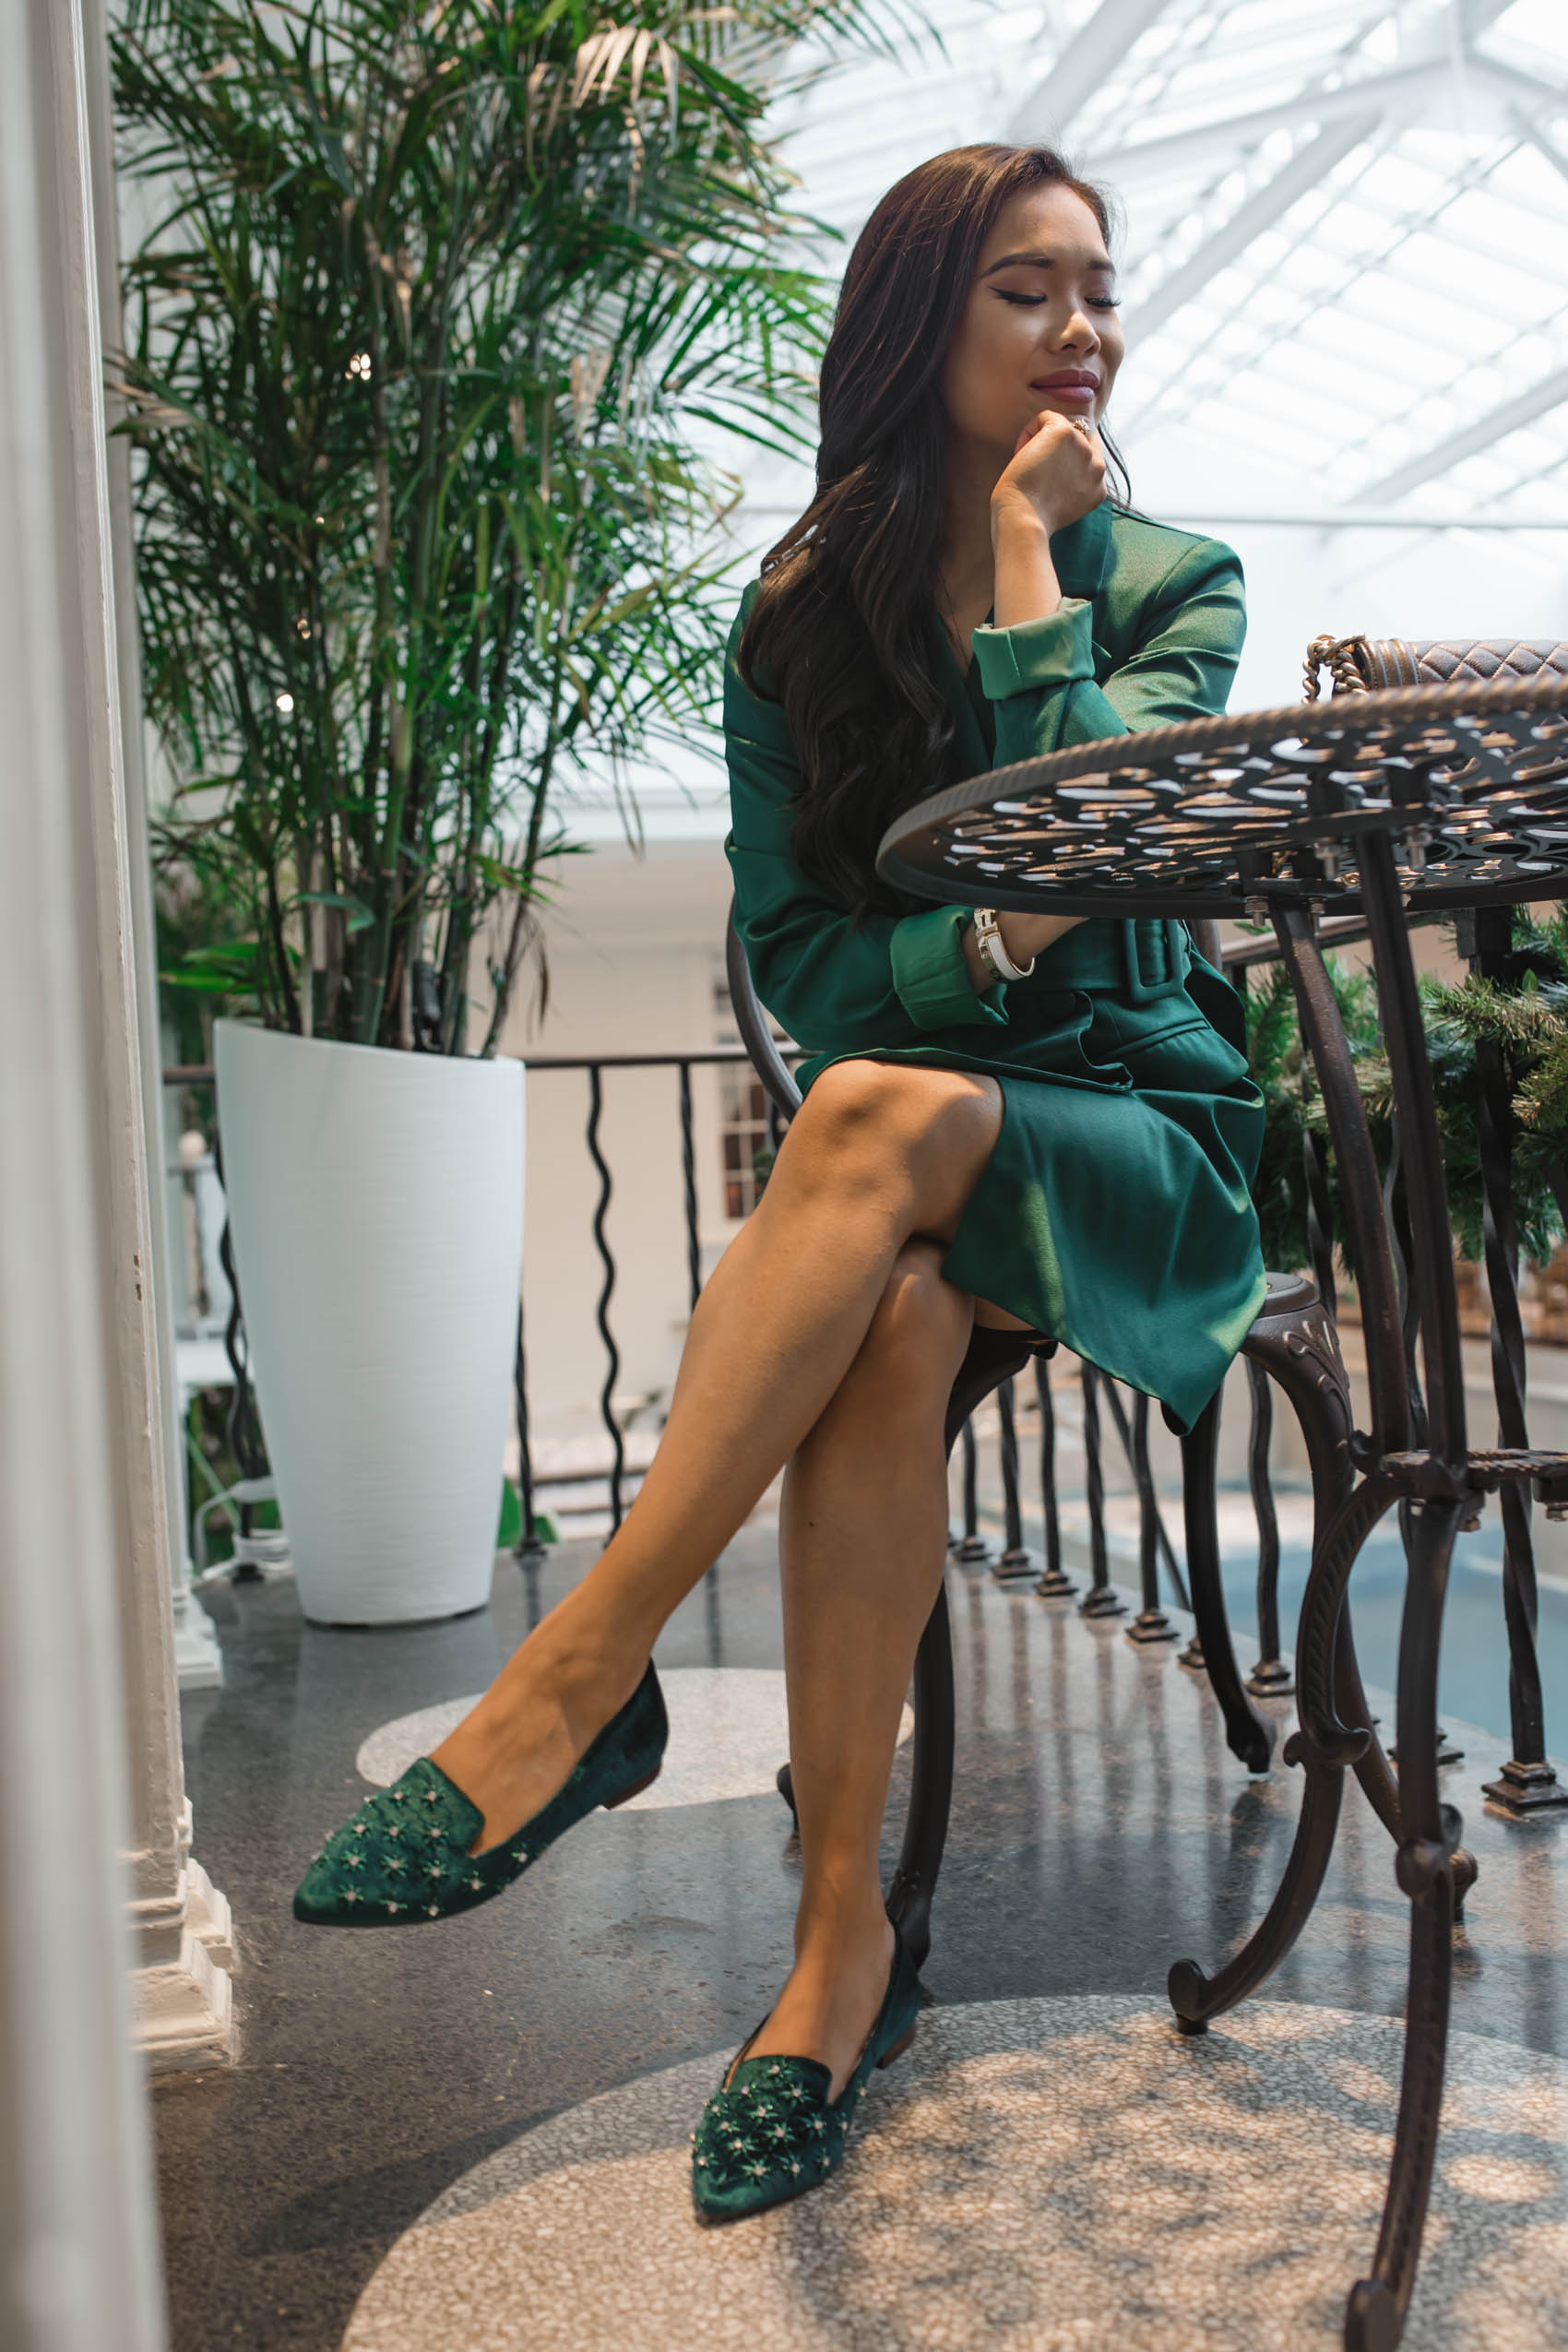 Blogger Hoang-Kim shares her favorite winter trend wearing velvet flats from Sole Society